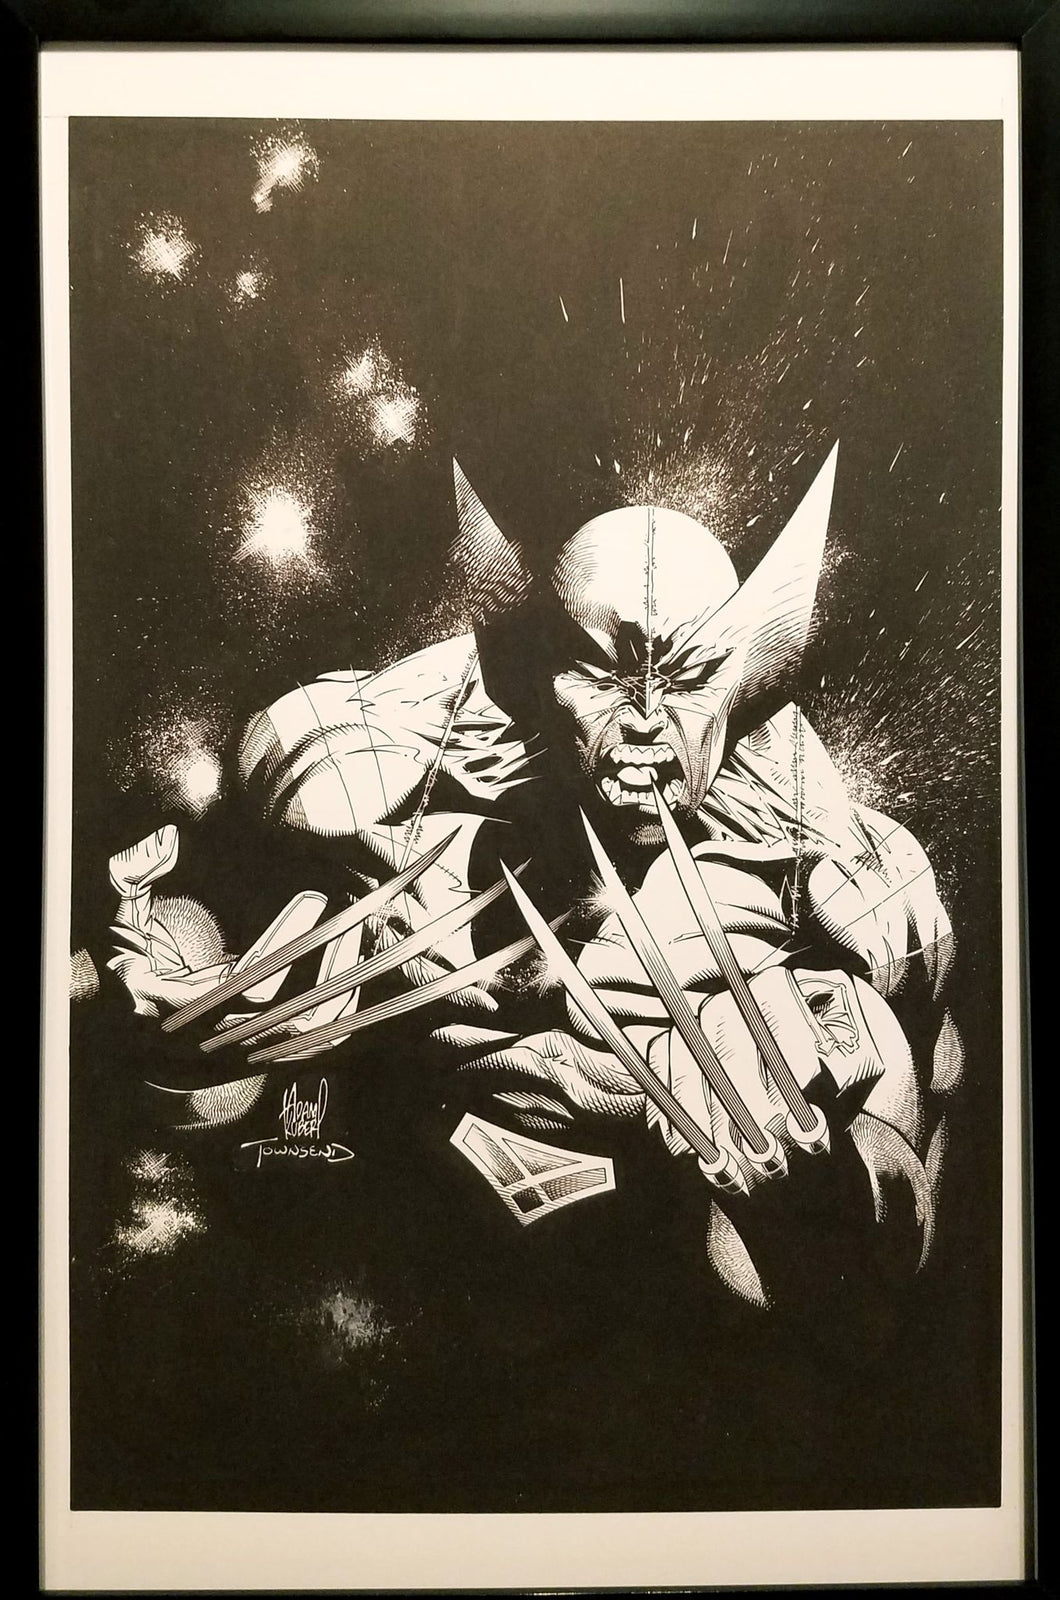 Uncanny X-Men #381 by Adam Kubert 11x17 FRAMED Original Art Poster Marvel Comics